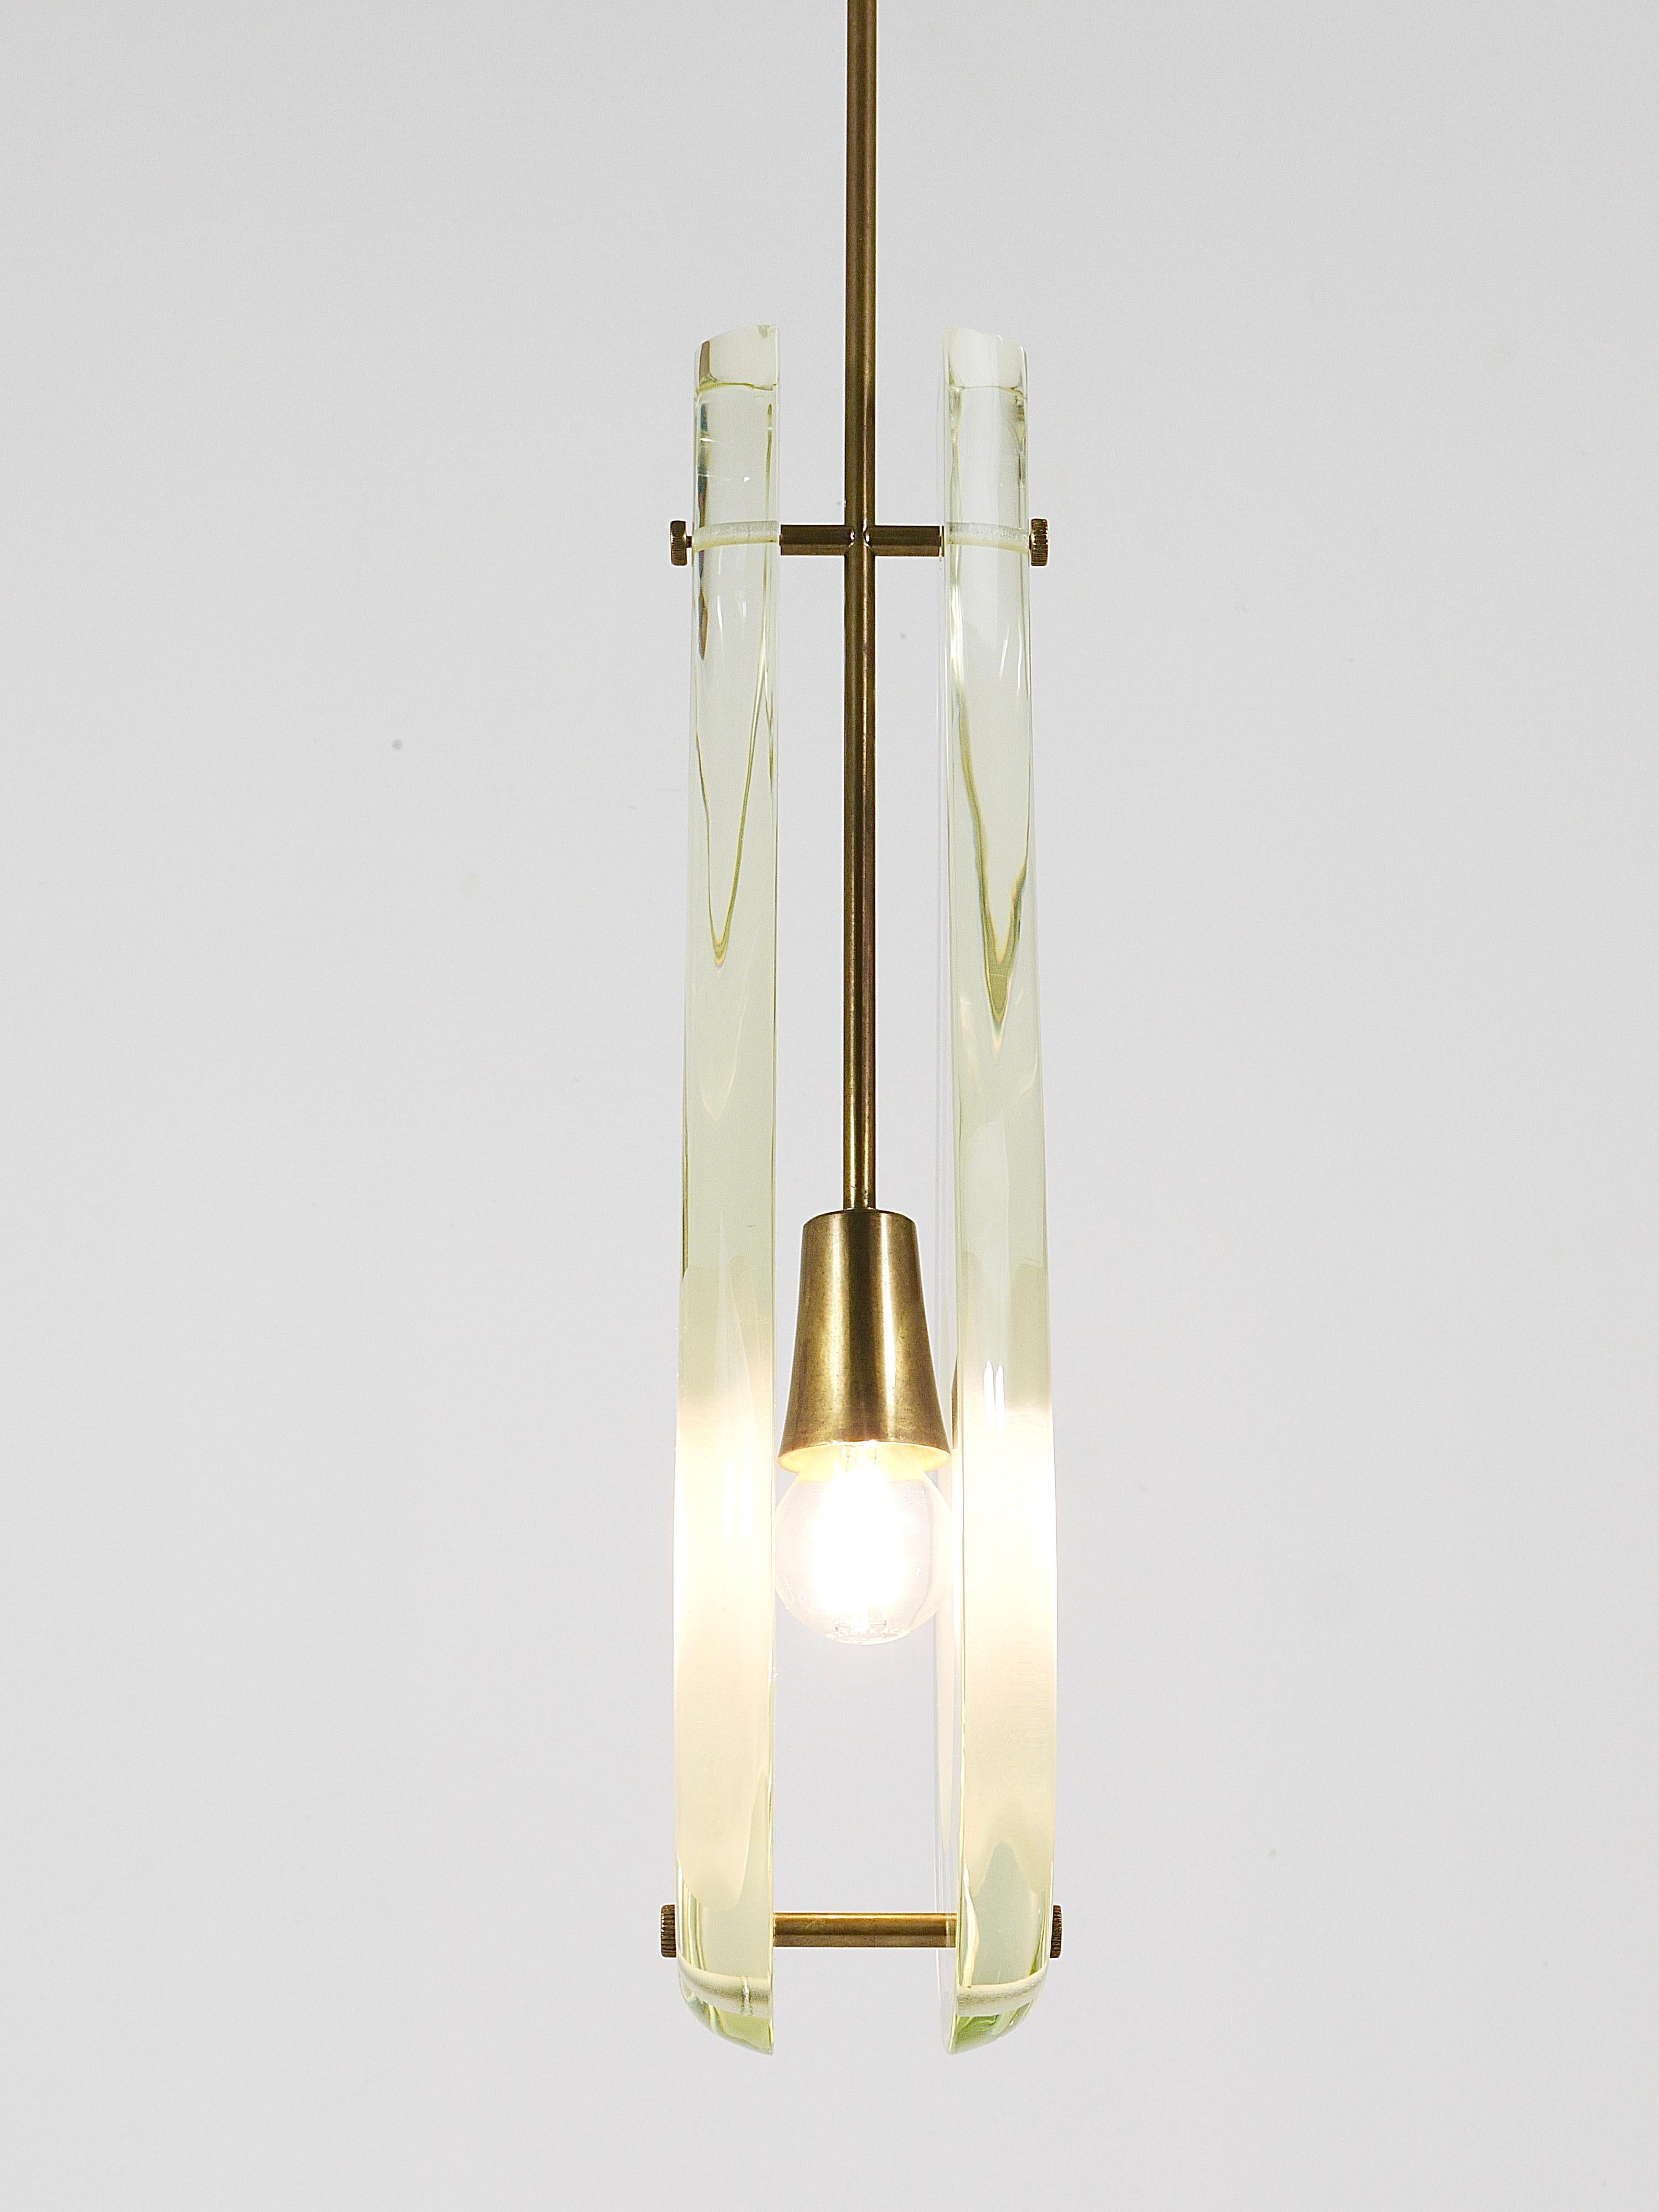 Max Ingrad For Fontana Arte Drop Pendant Lamp, Model 2259, Italy, 1960s For Sale 1